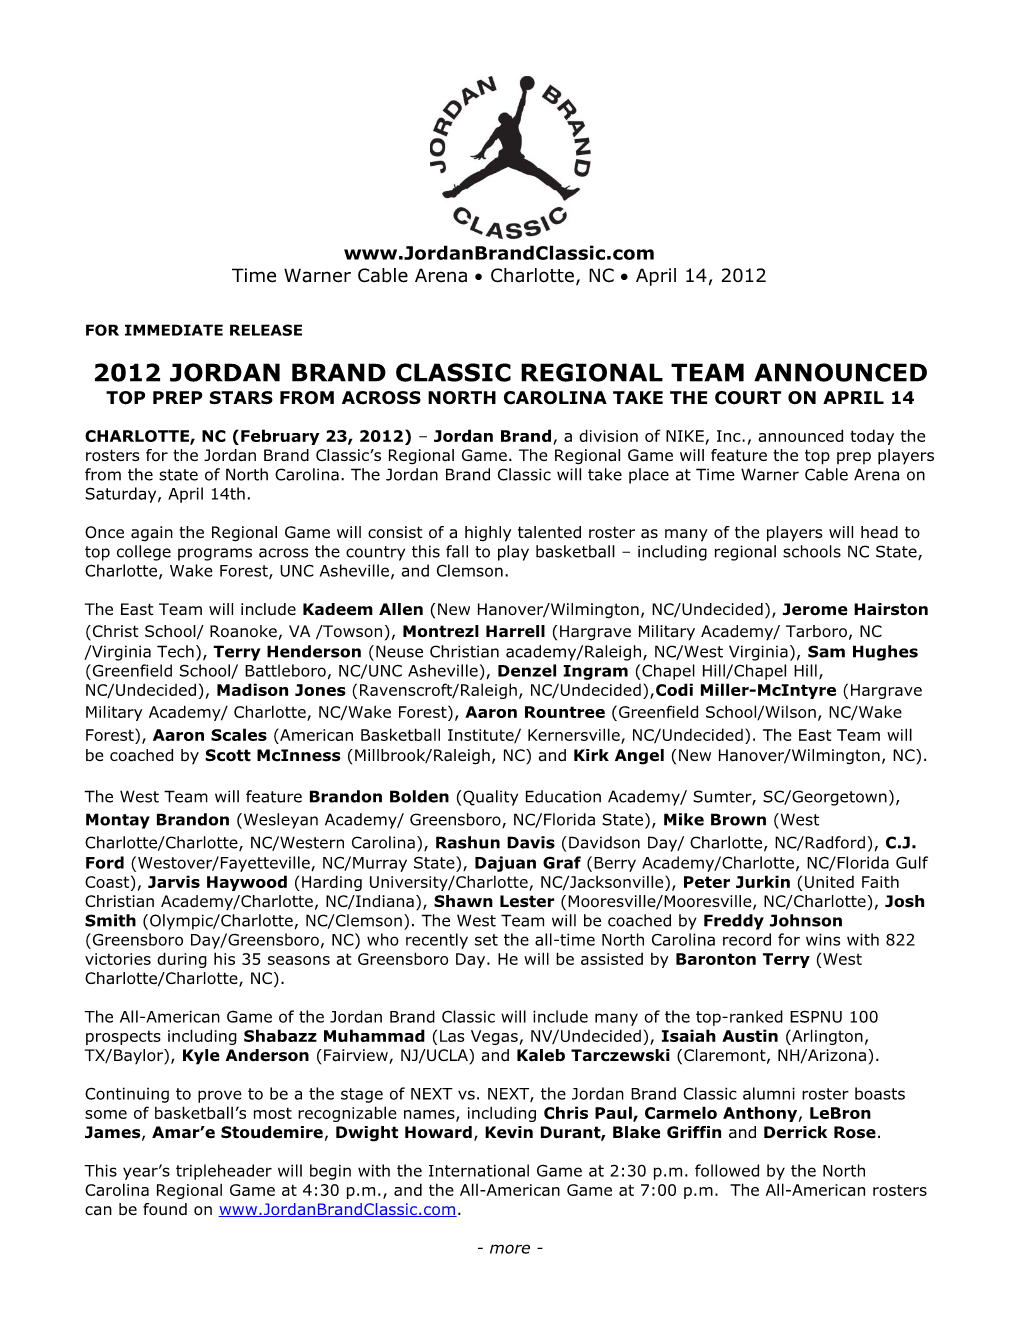 2012 Jordan Brand Classic Regional Teamannounced